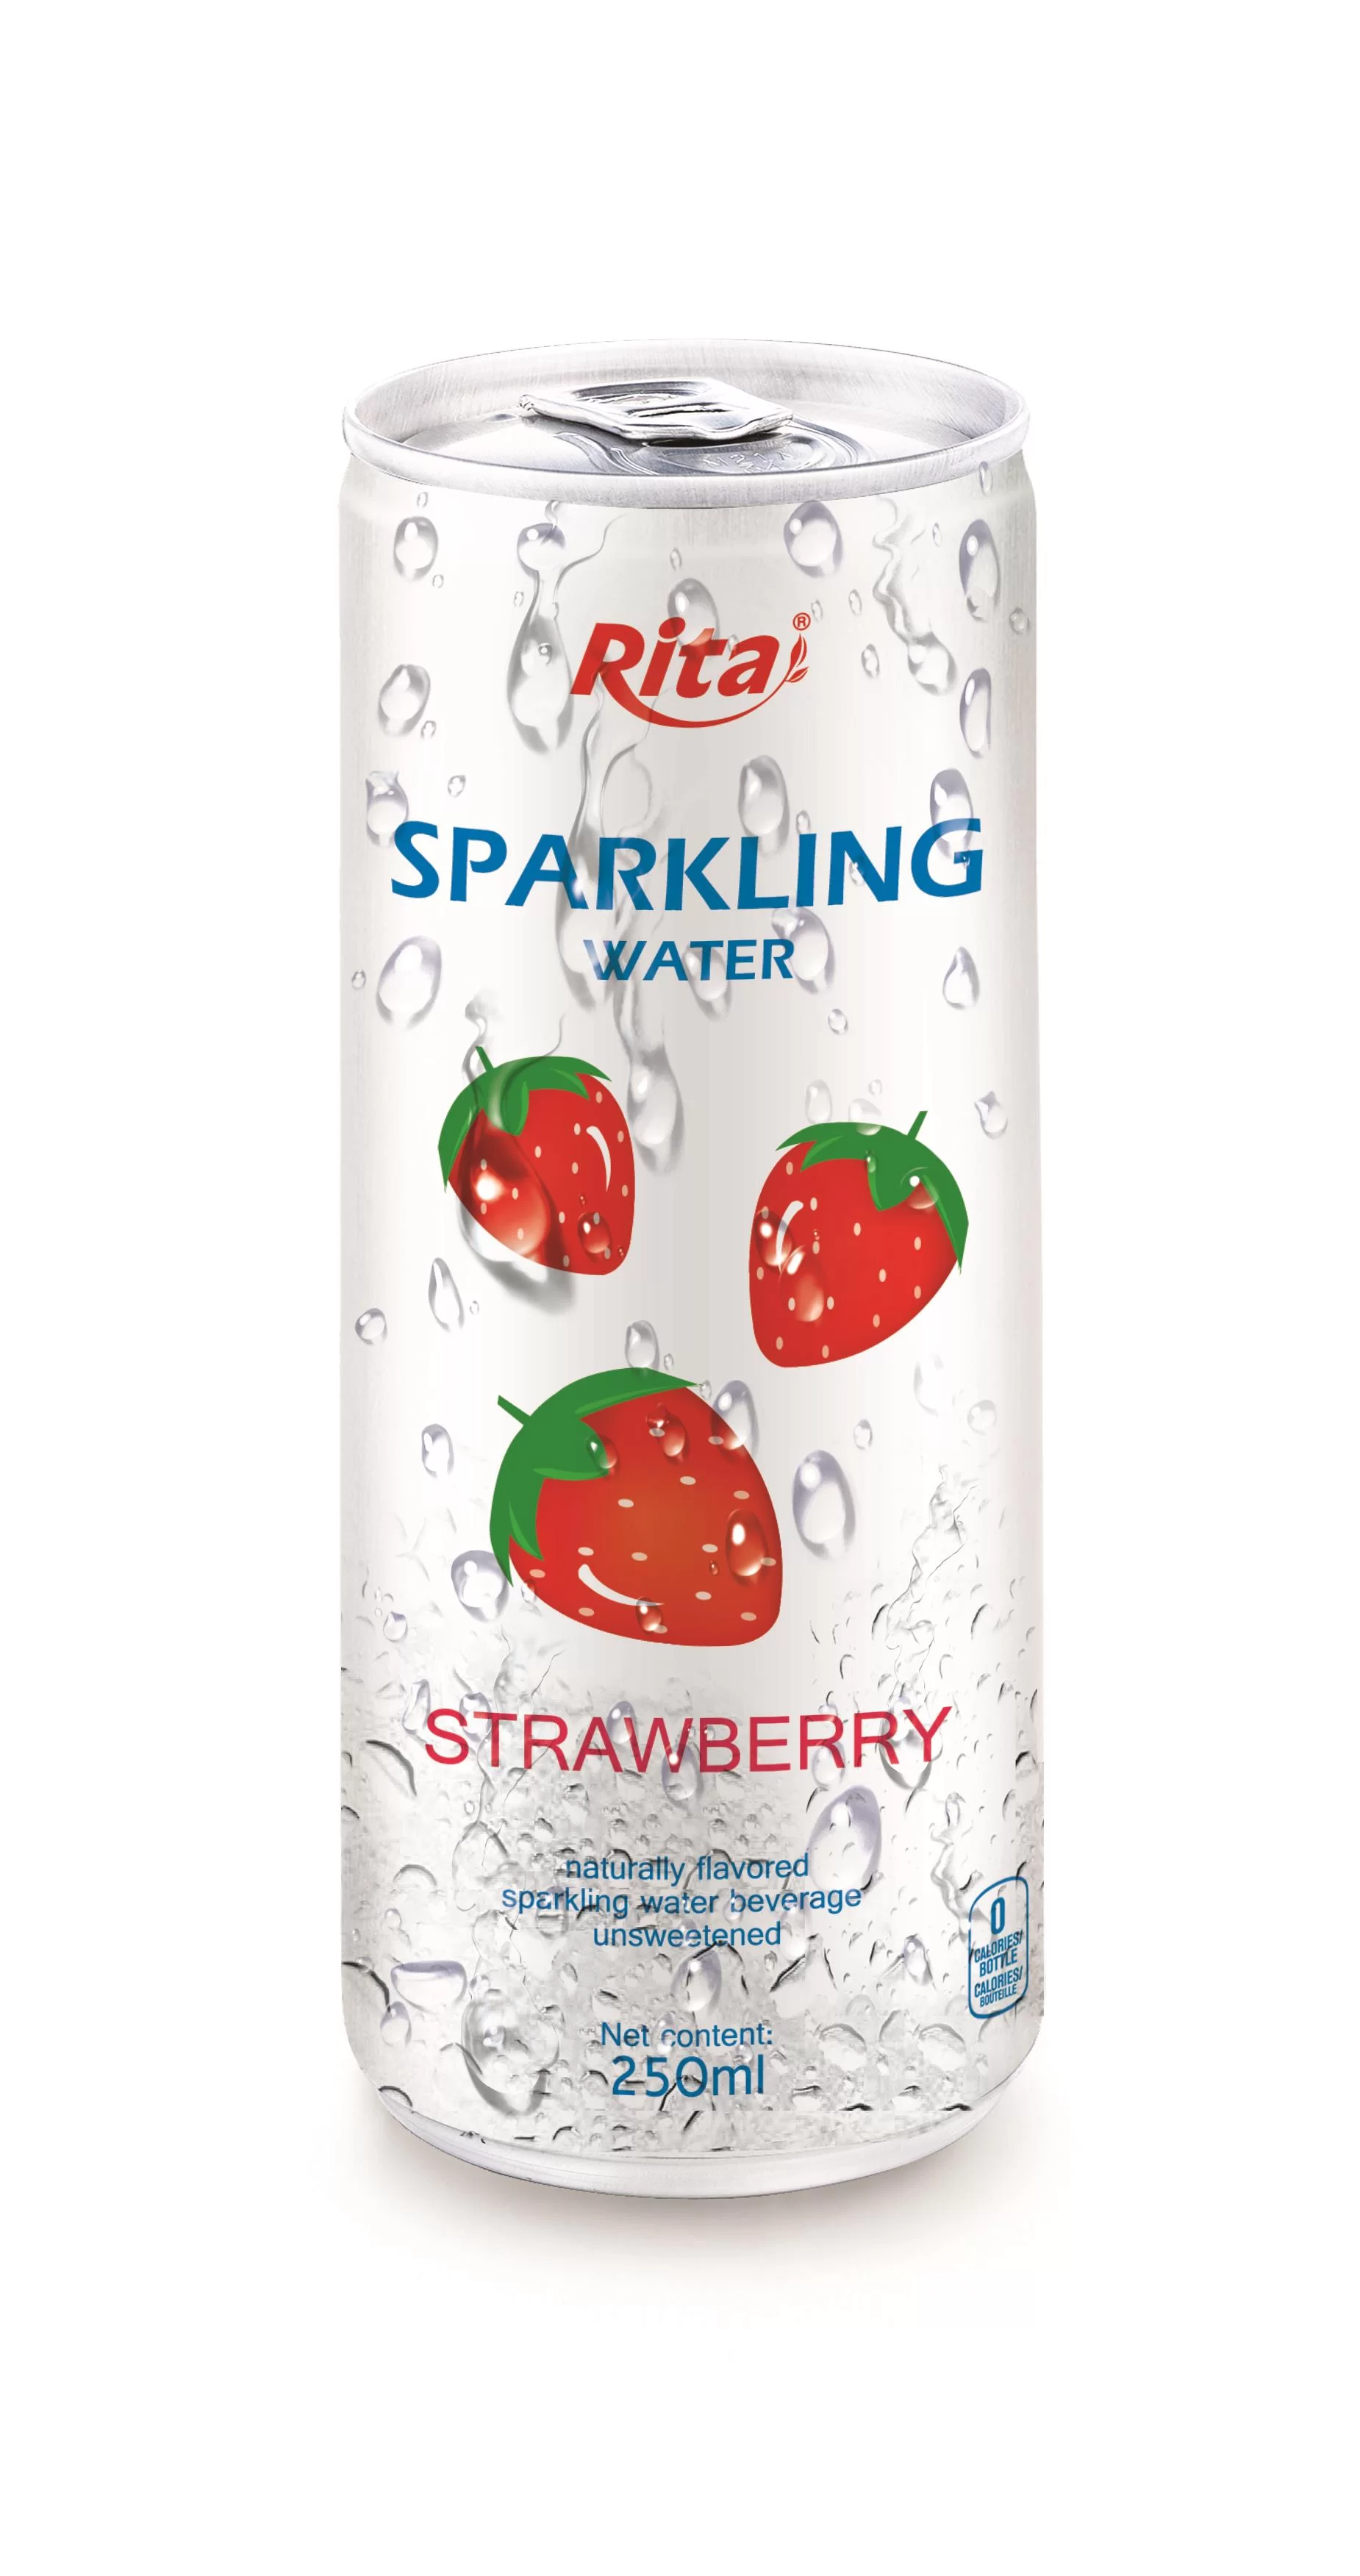 flavored sparkling water brands